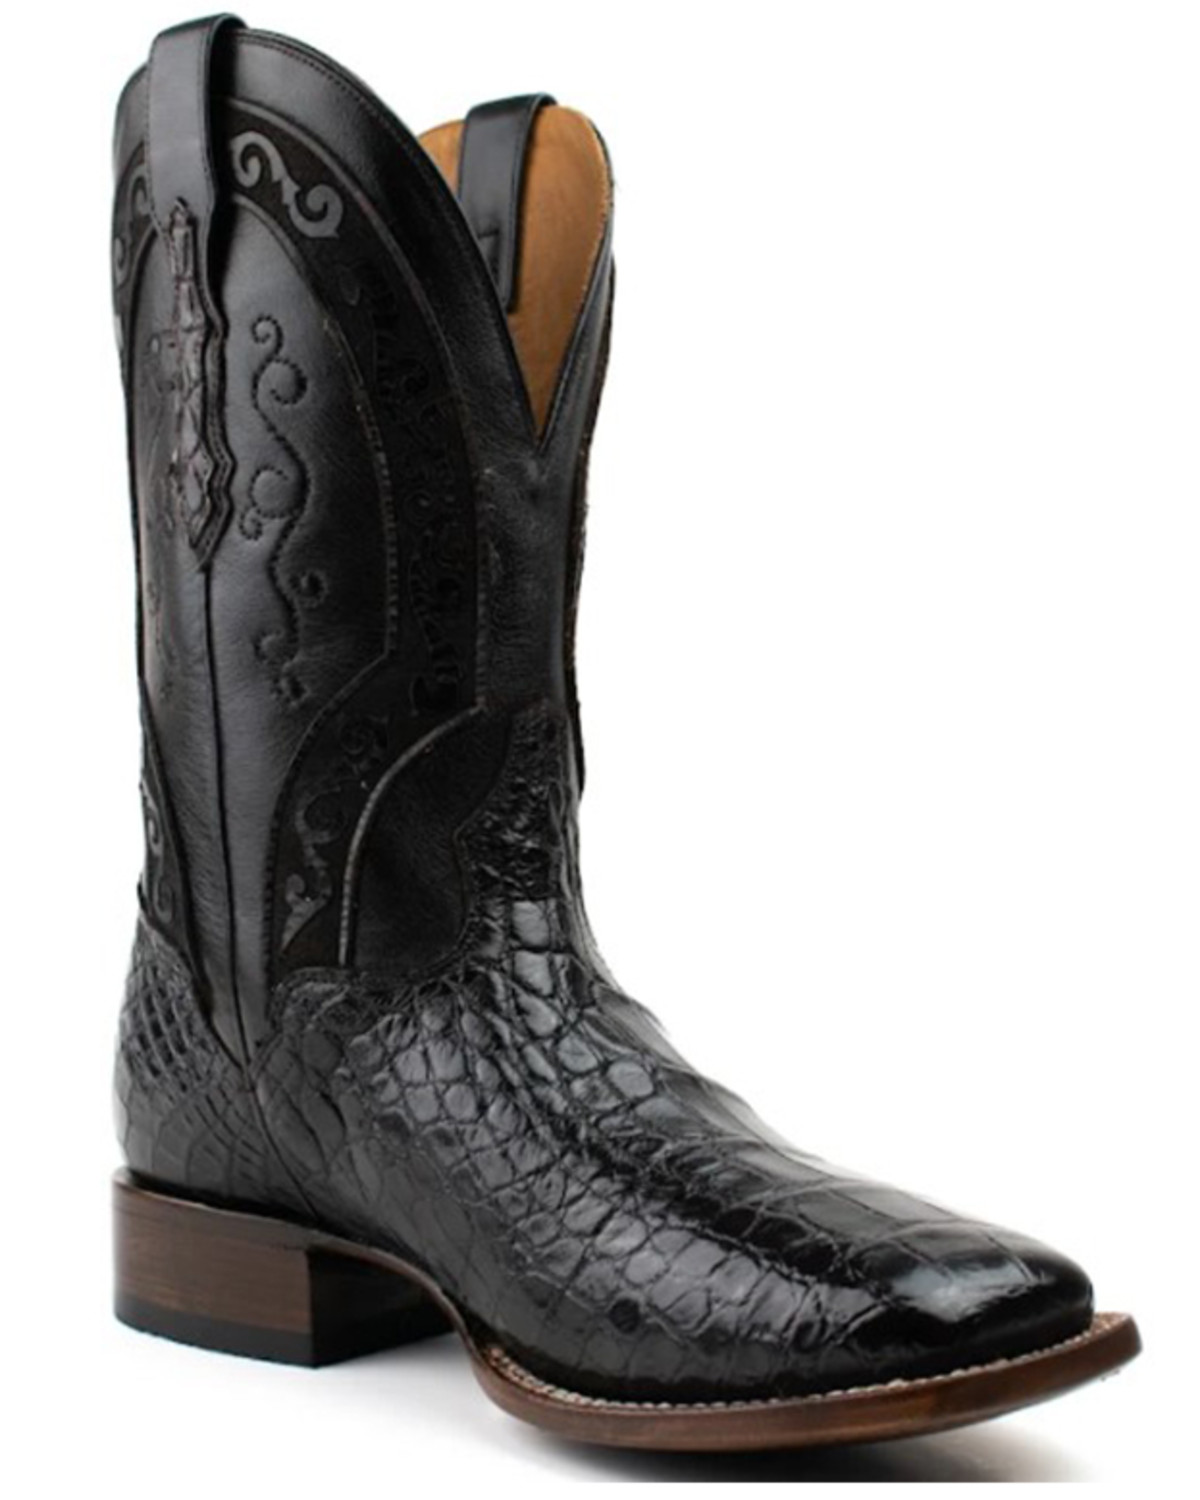 Men's Alligator & Crocodile Cowboy Boots